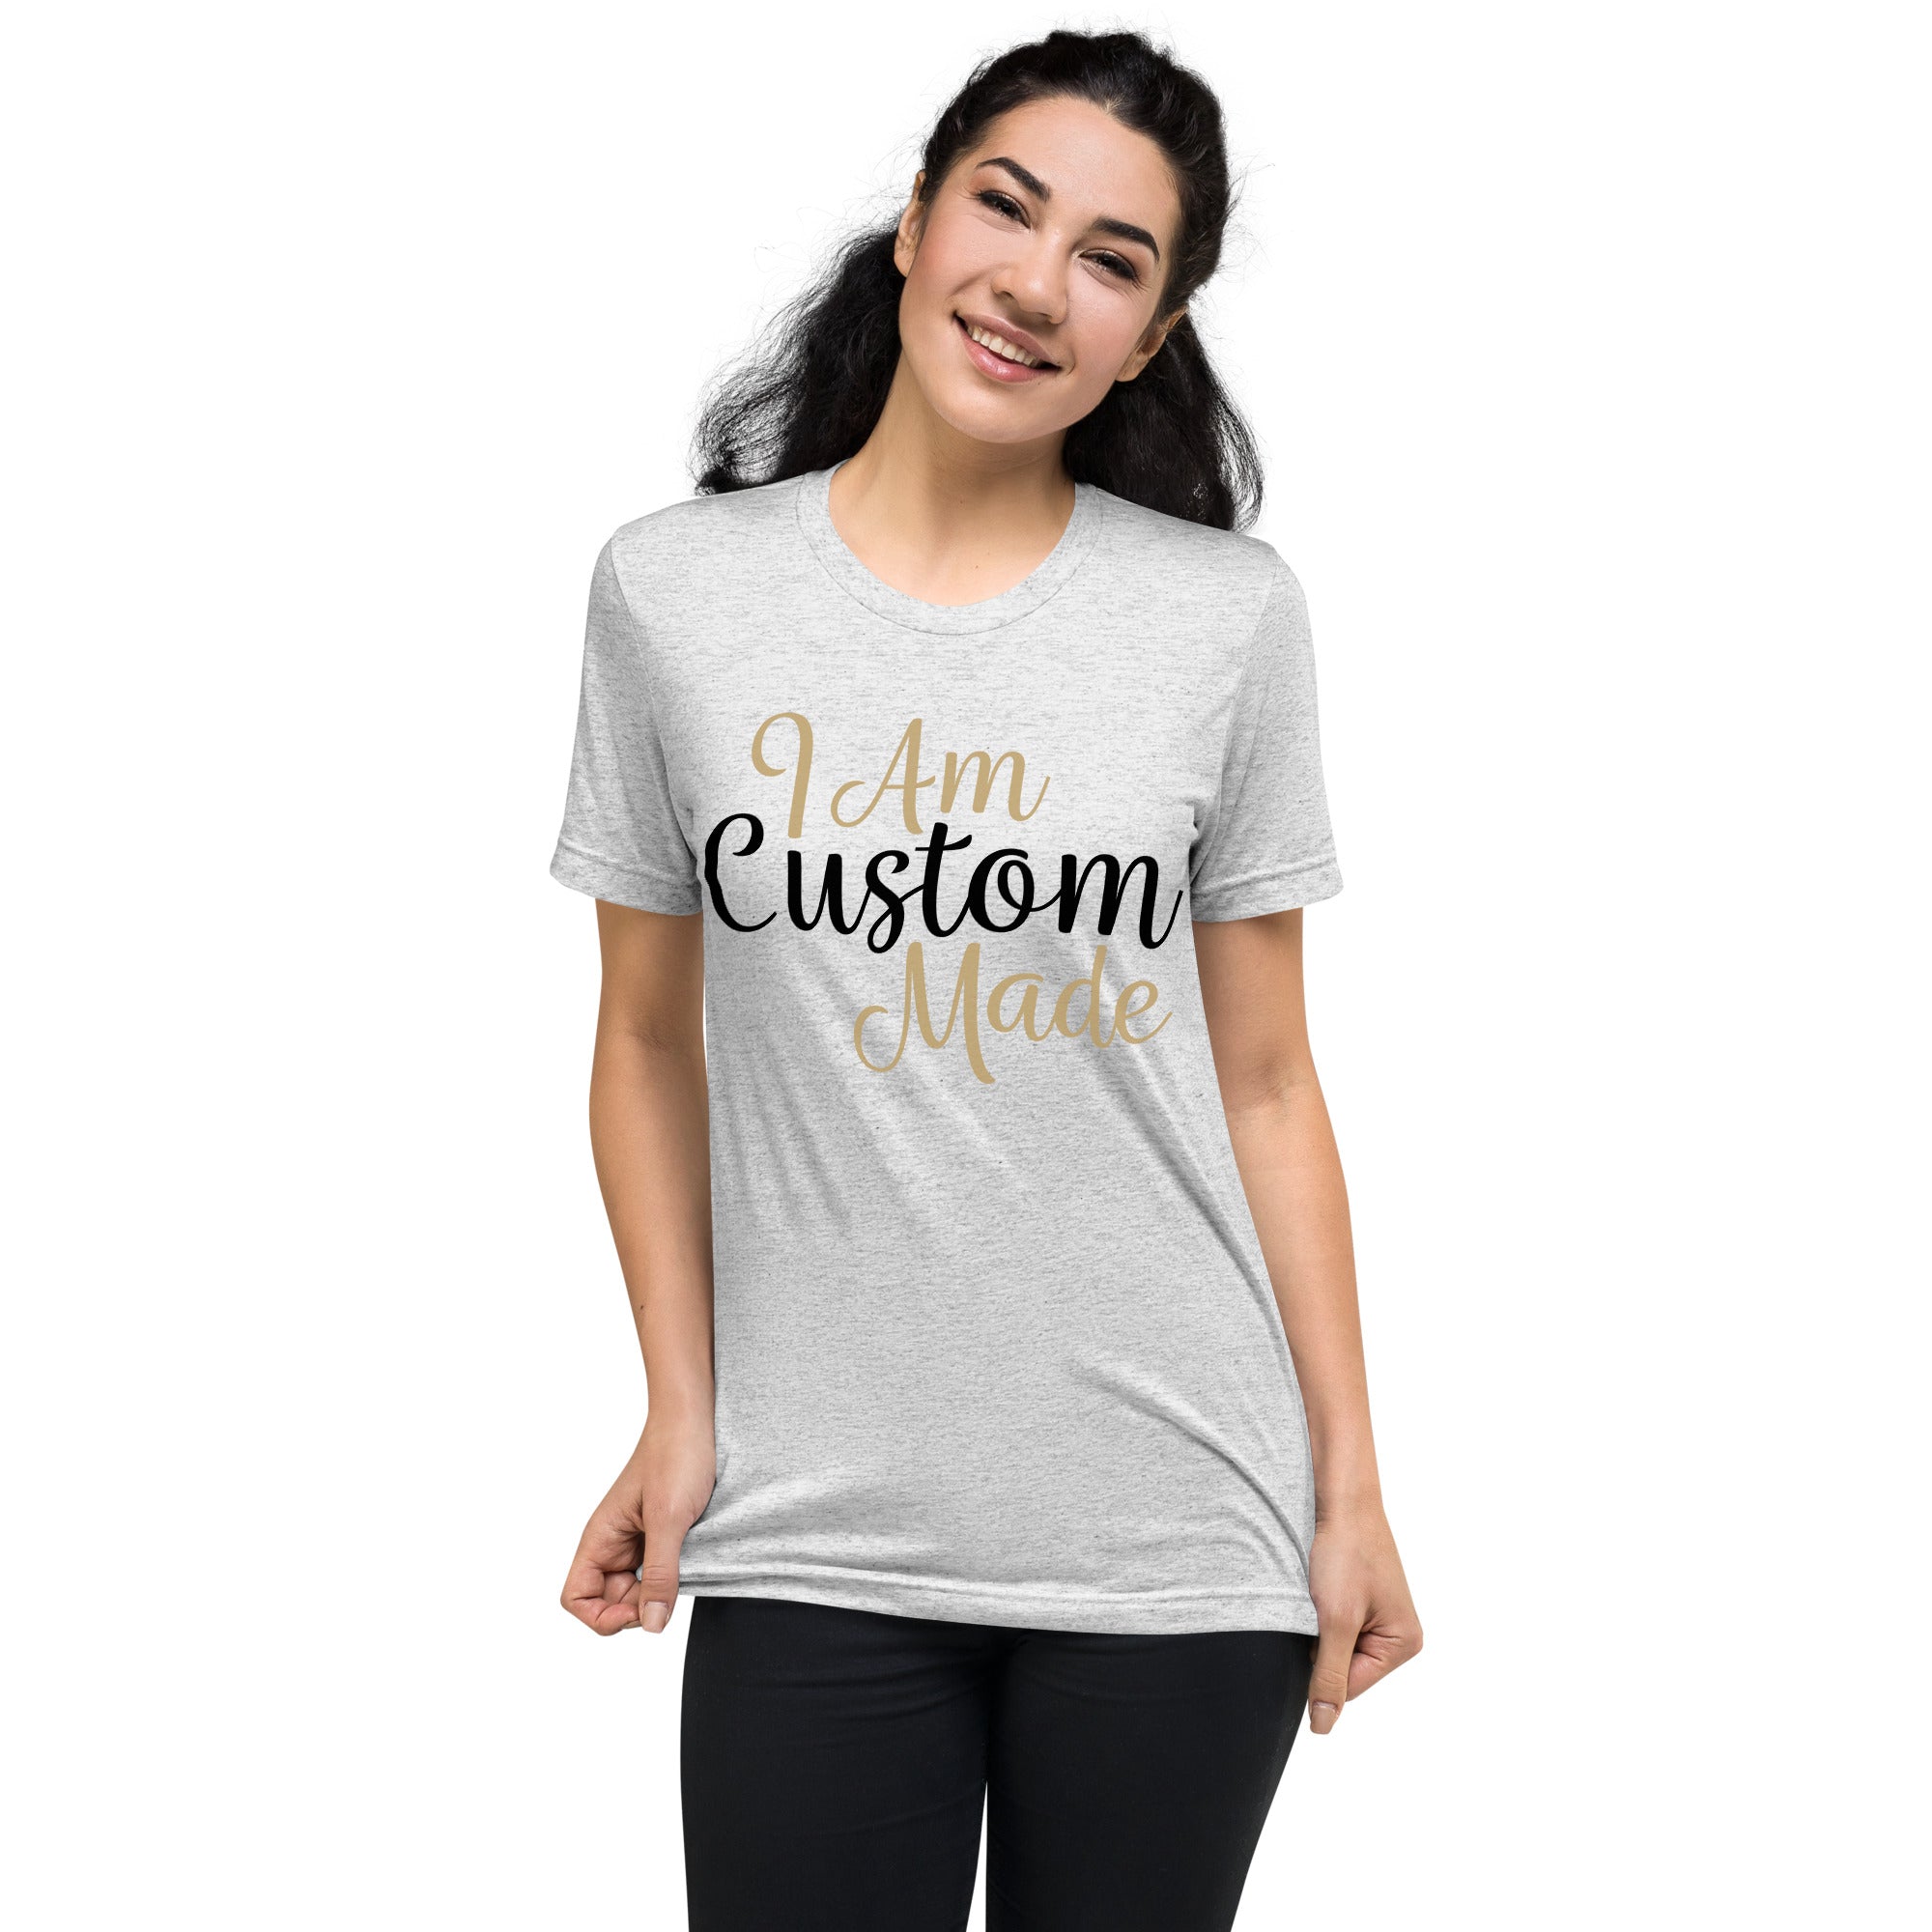 I AM CUSTOM MADE | Short sleeve t-shirt